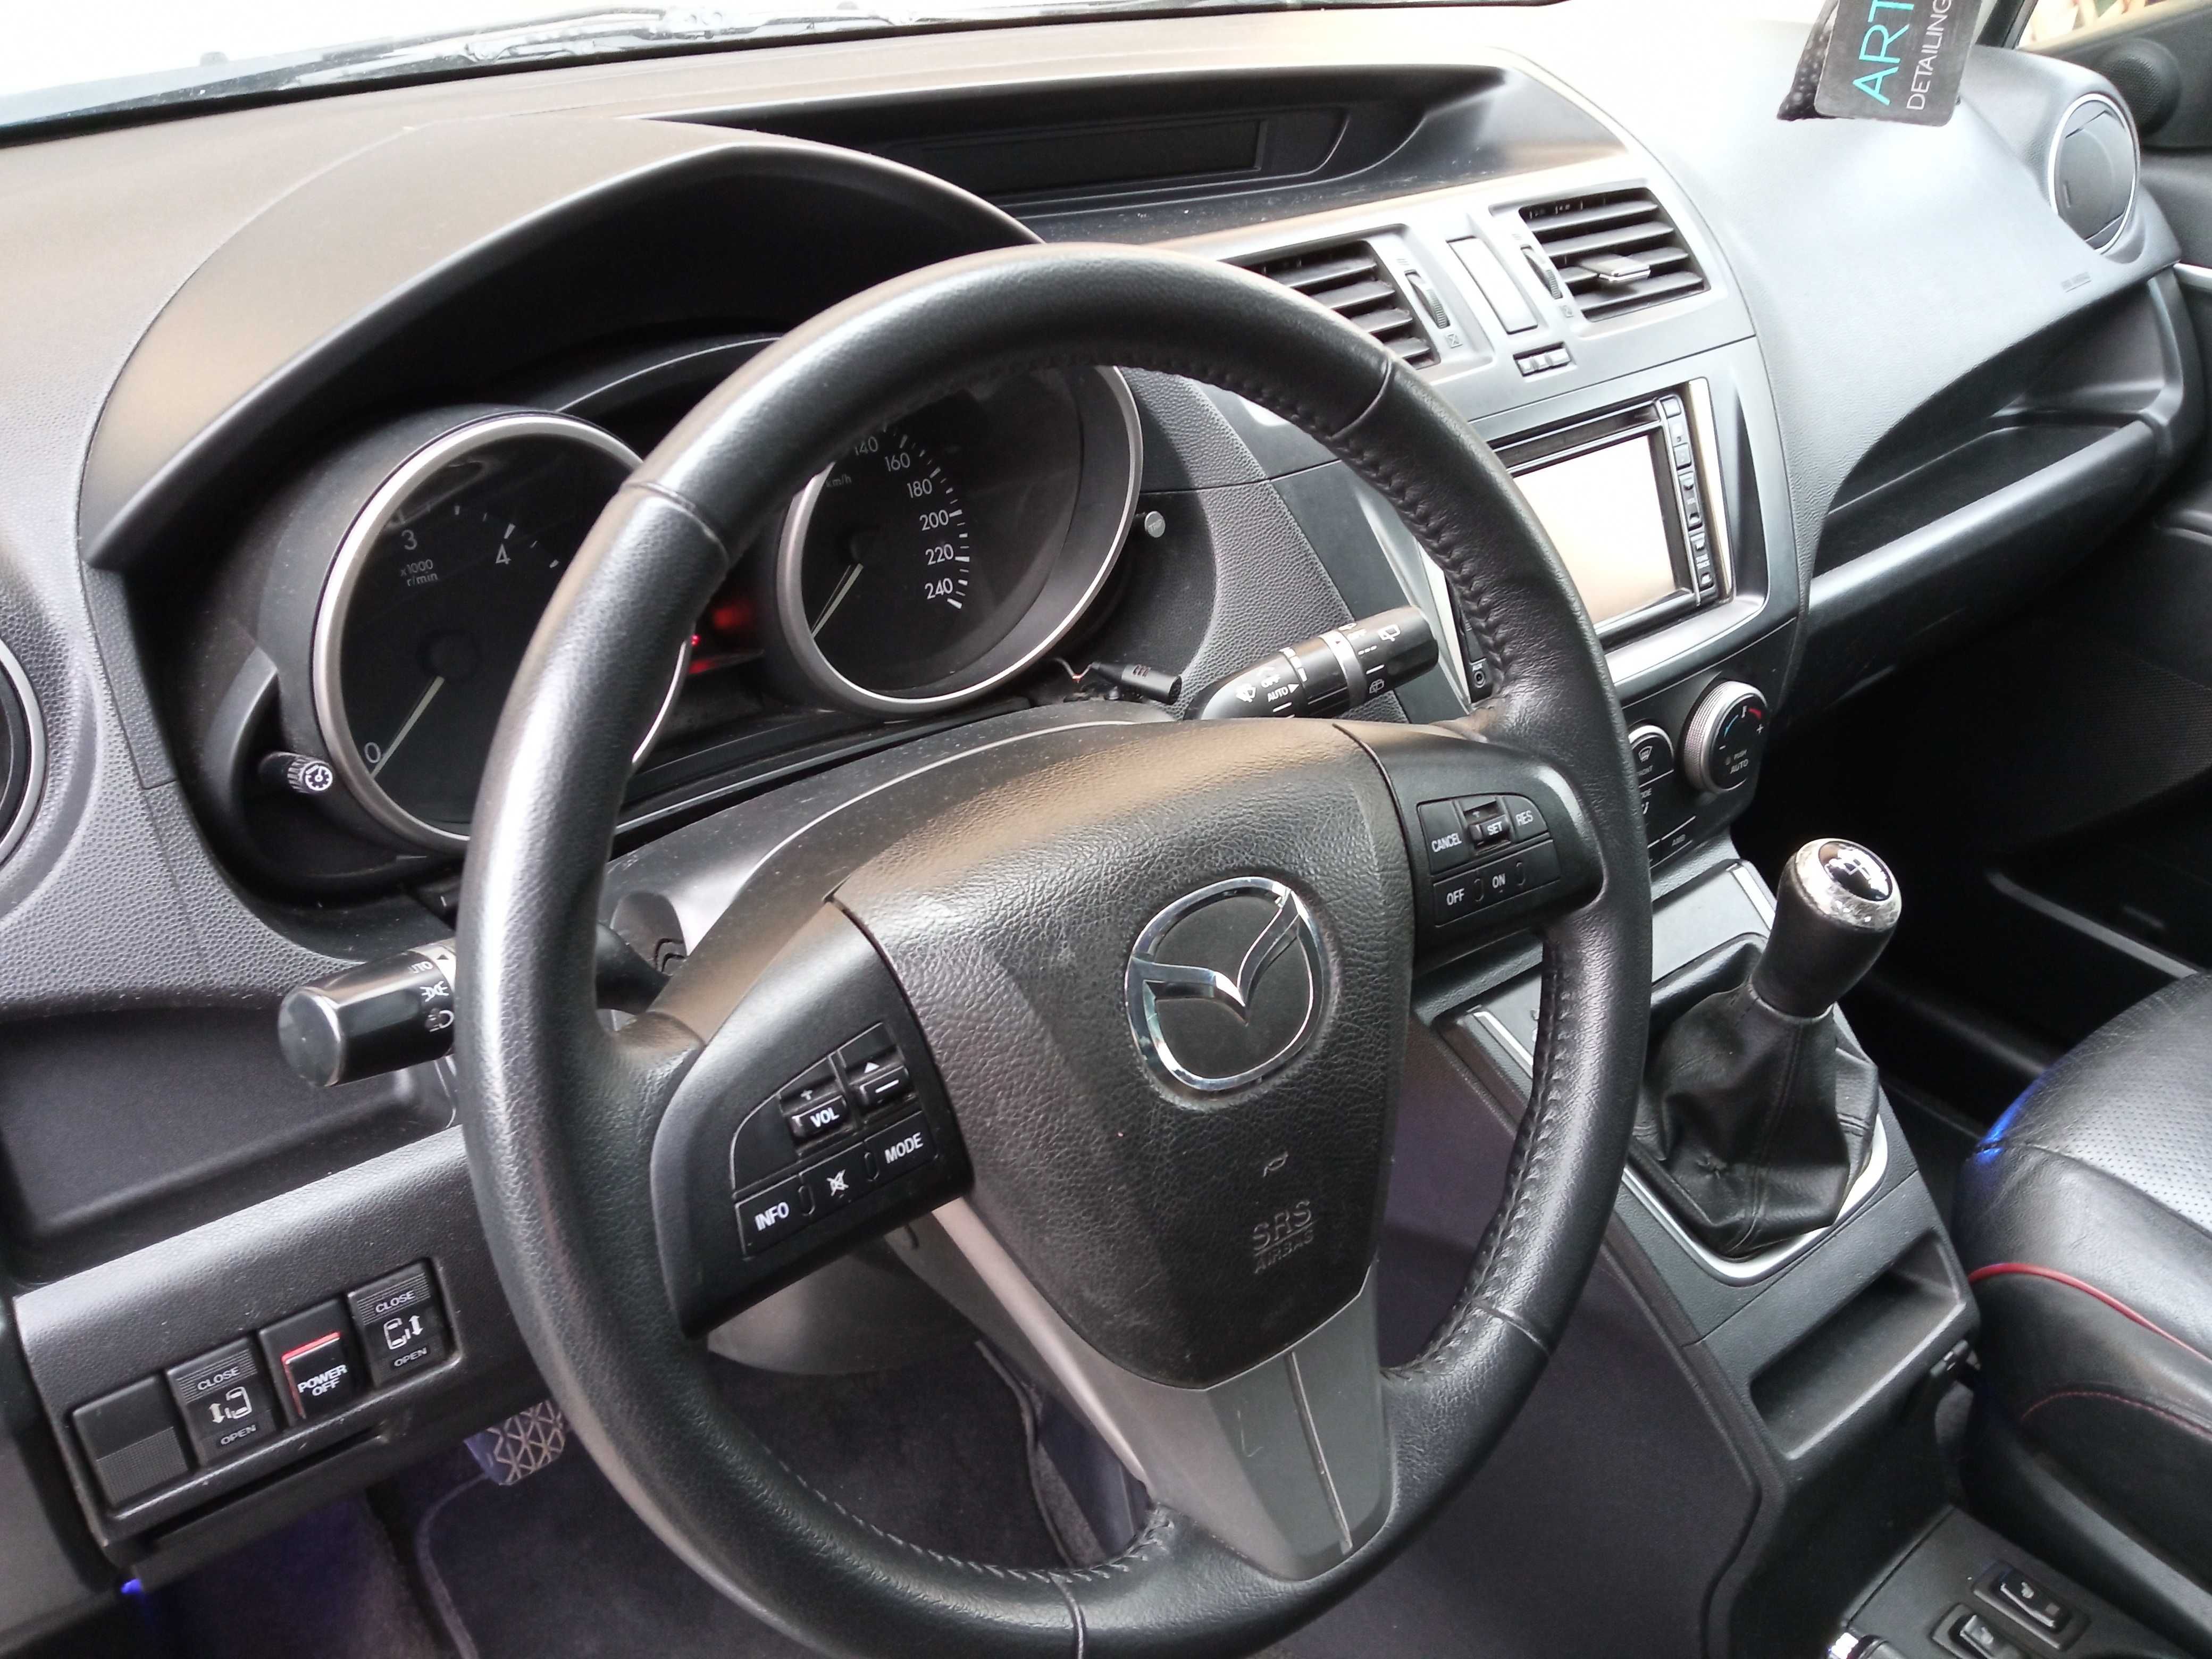 Mazda 5 2011, xenon skóra, 7os. Pakiet Sport, navi. Nowe wtryski.